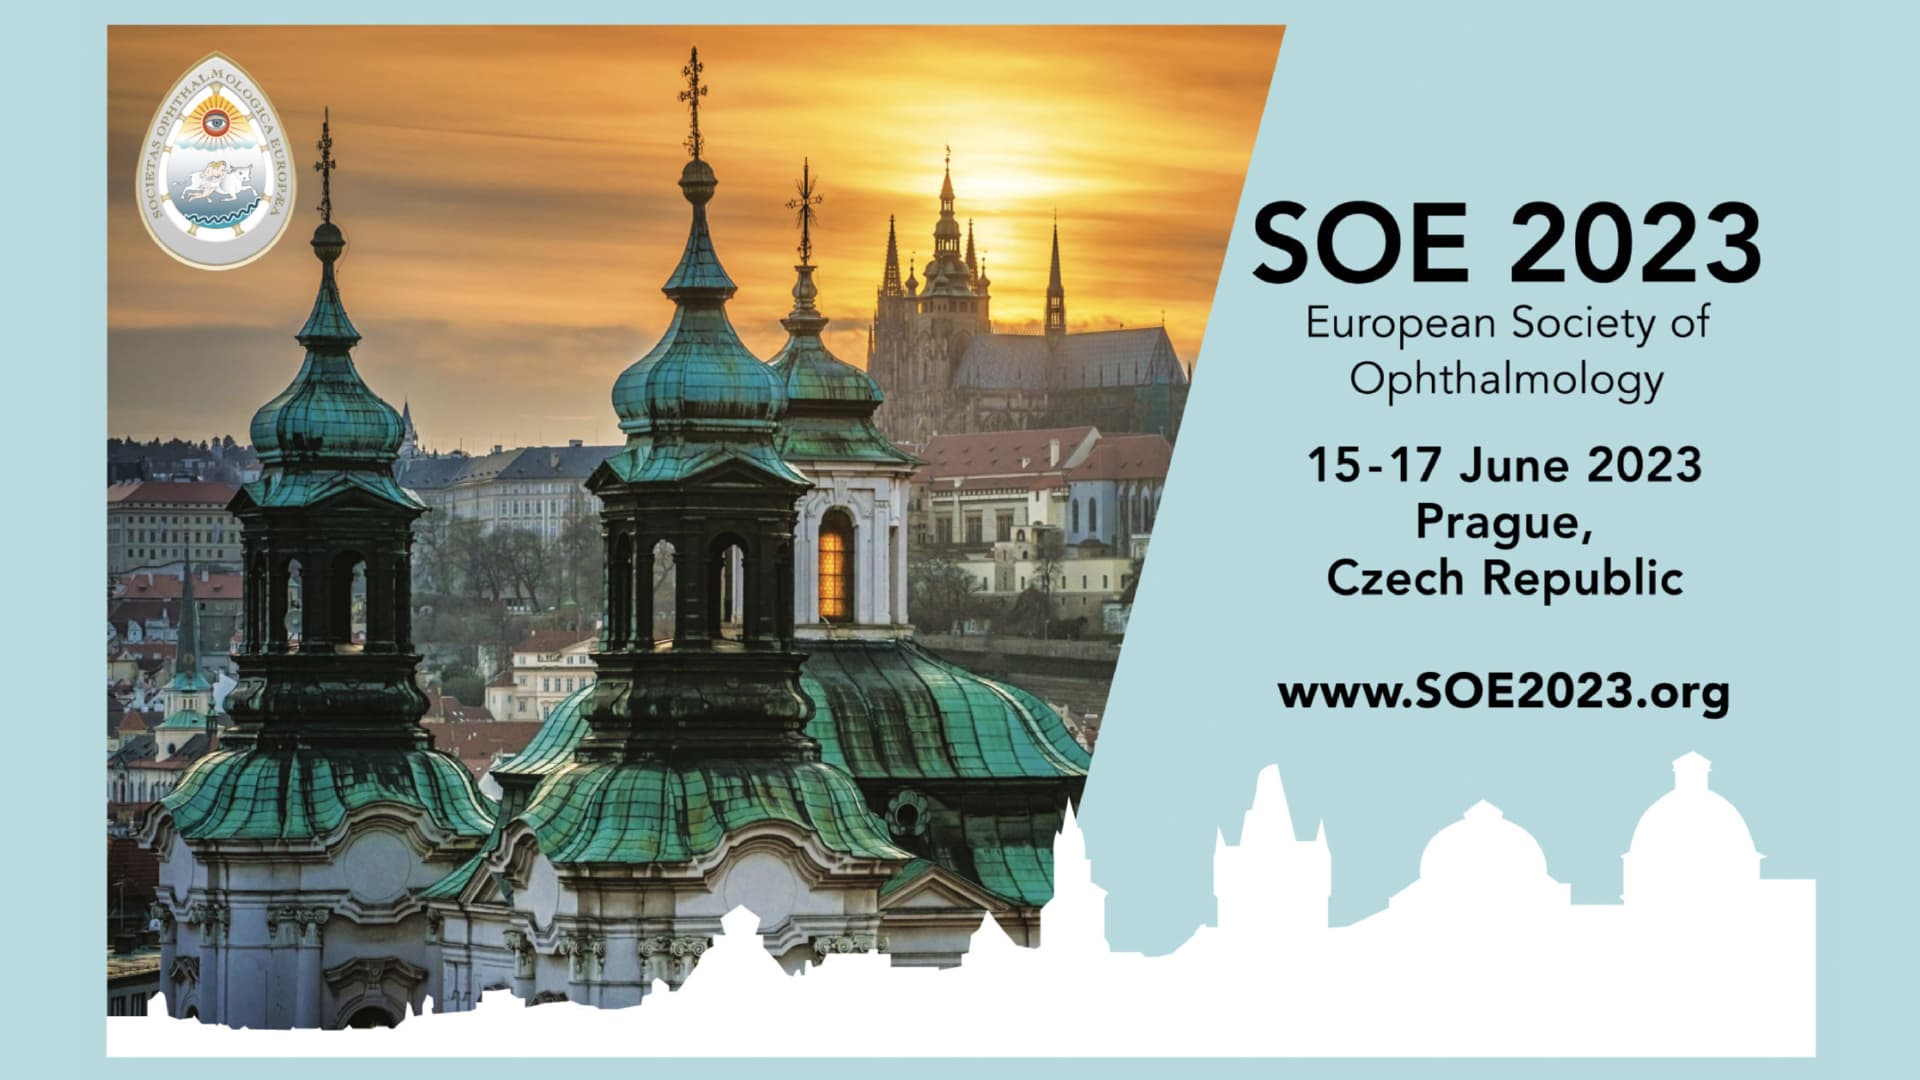 SOE European Society of Ophthalmology congress 2023